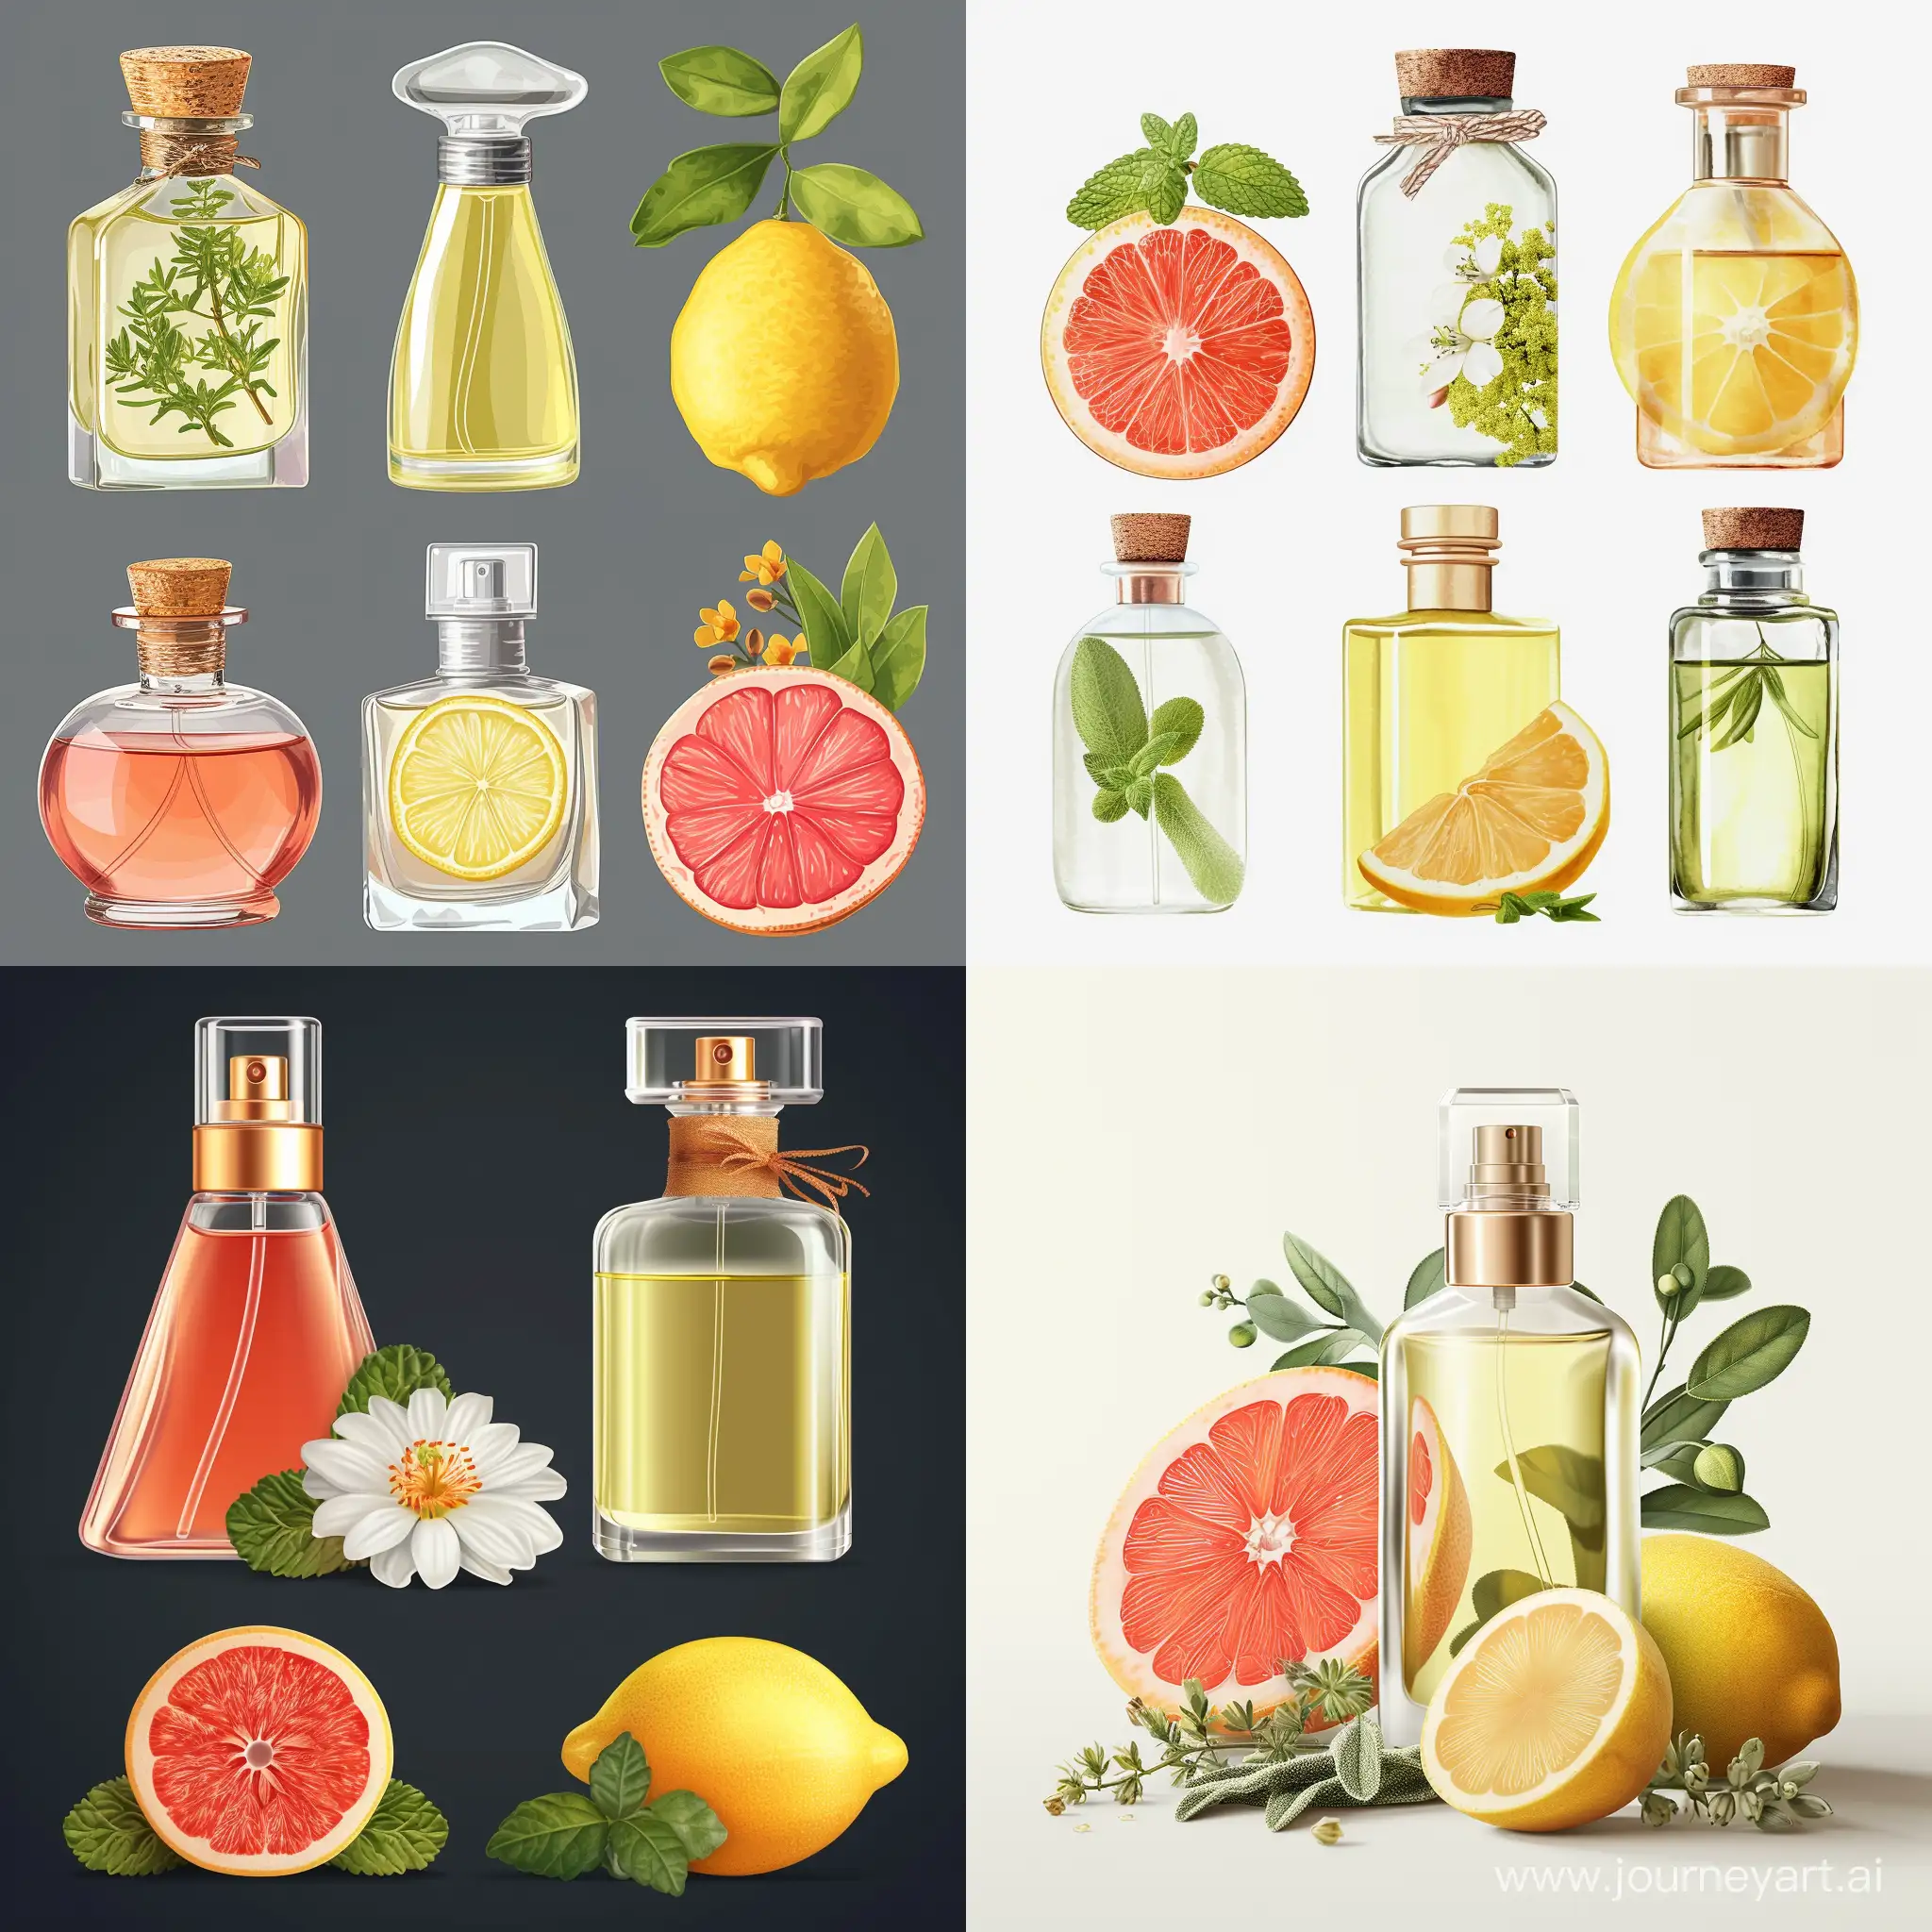 Exquisite-Perfume-Bottles-with-Clary-Sage-Lemon-Grapefruit-and-Neroli-Aromas